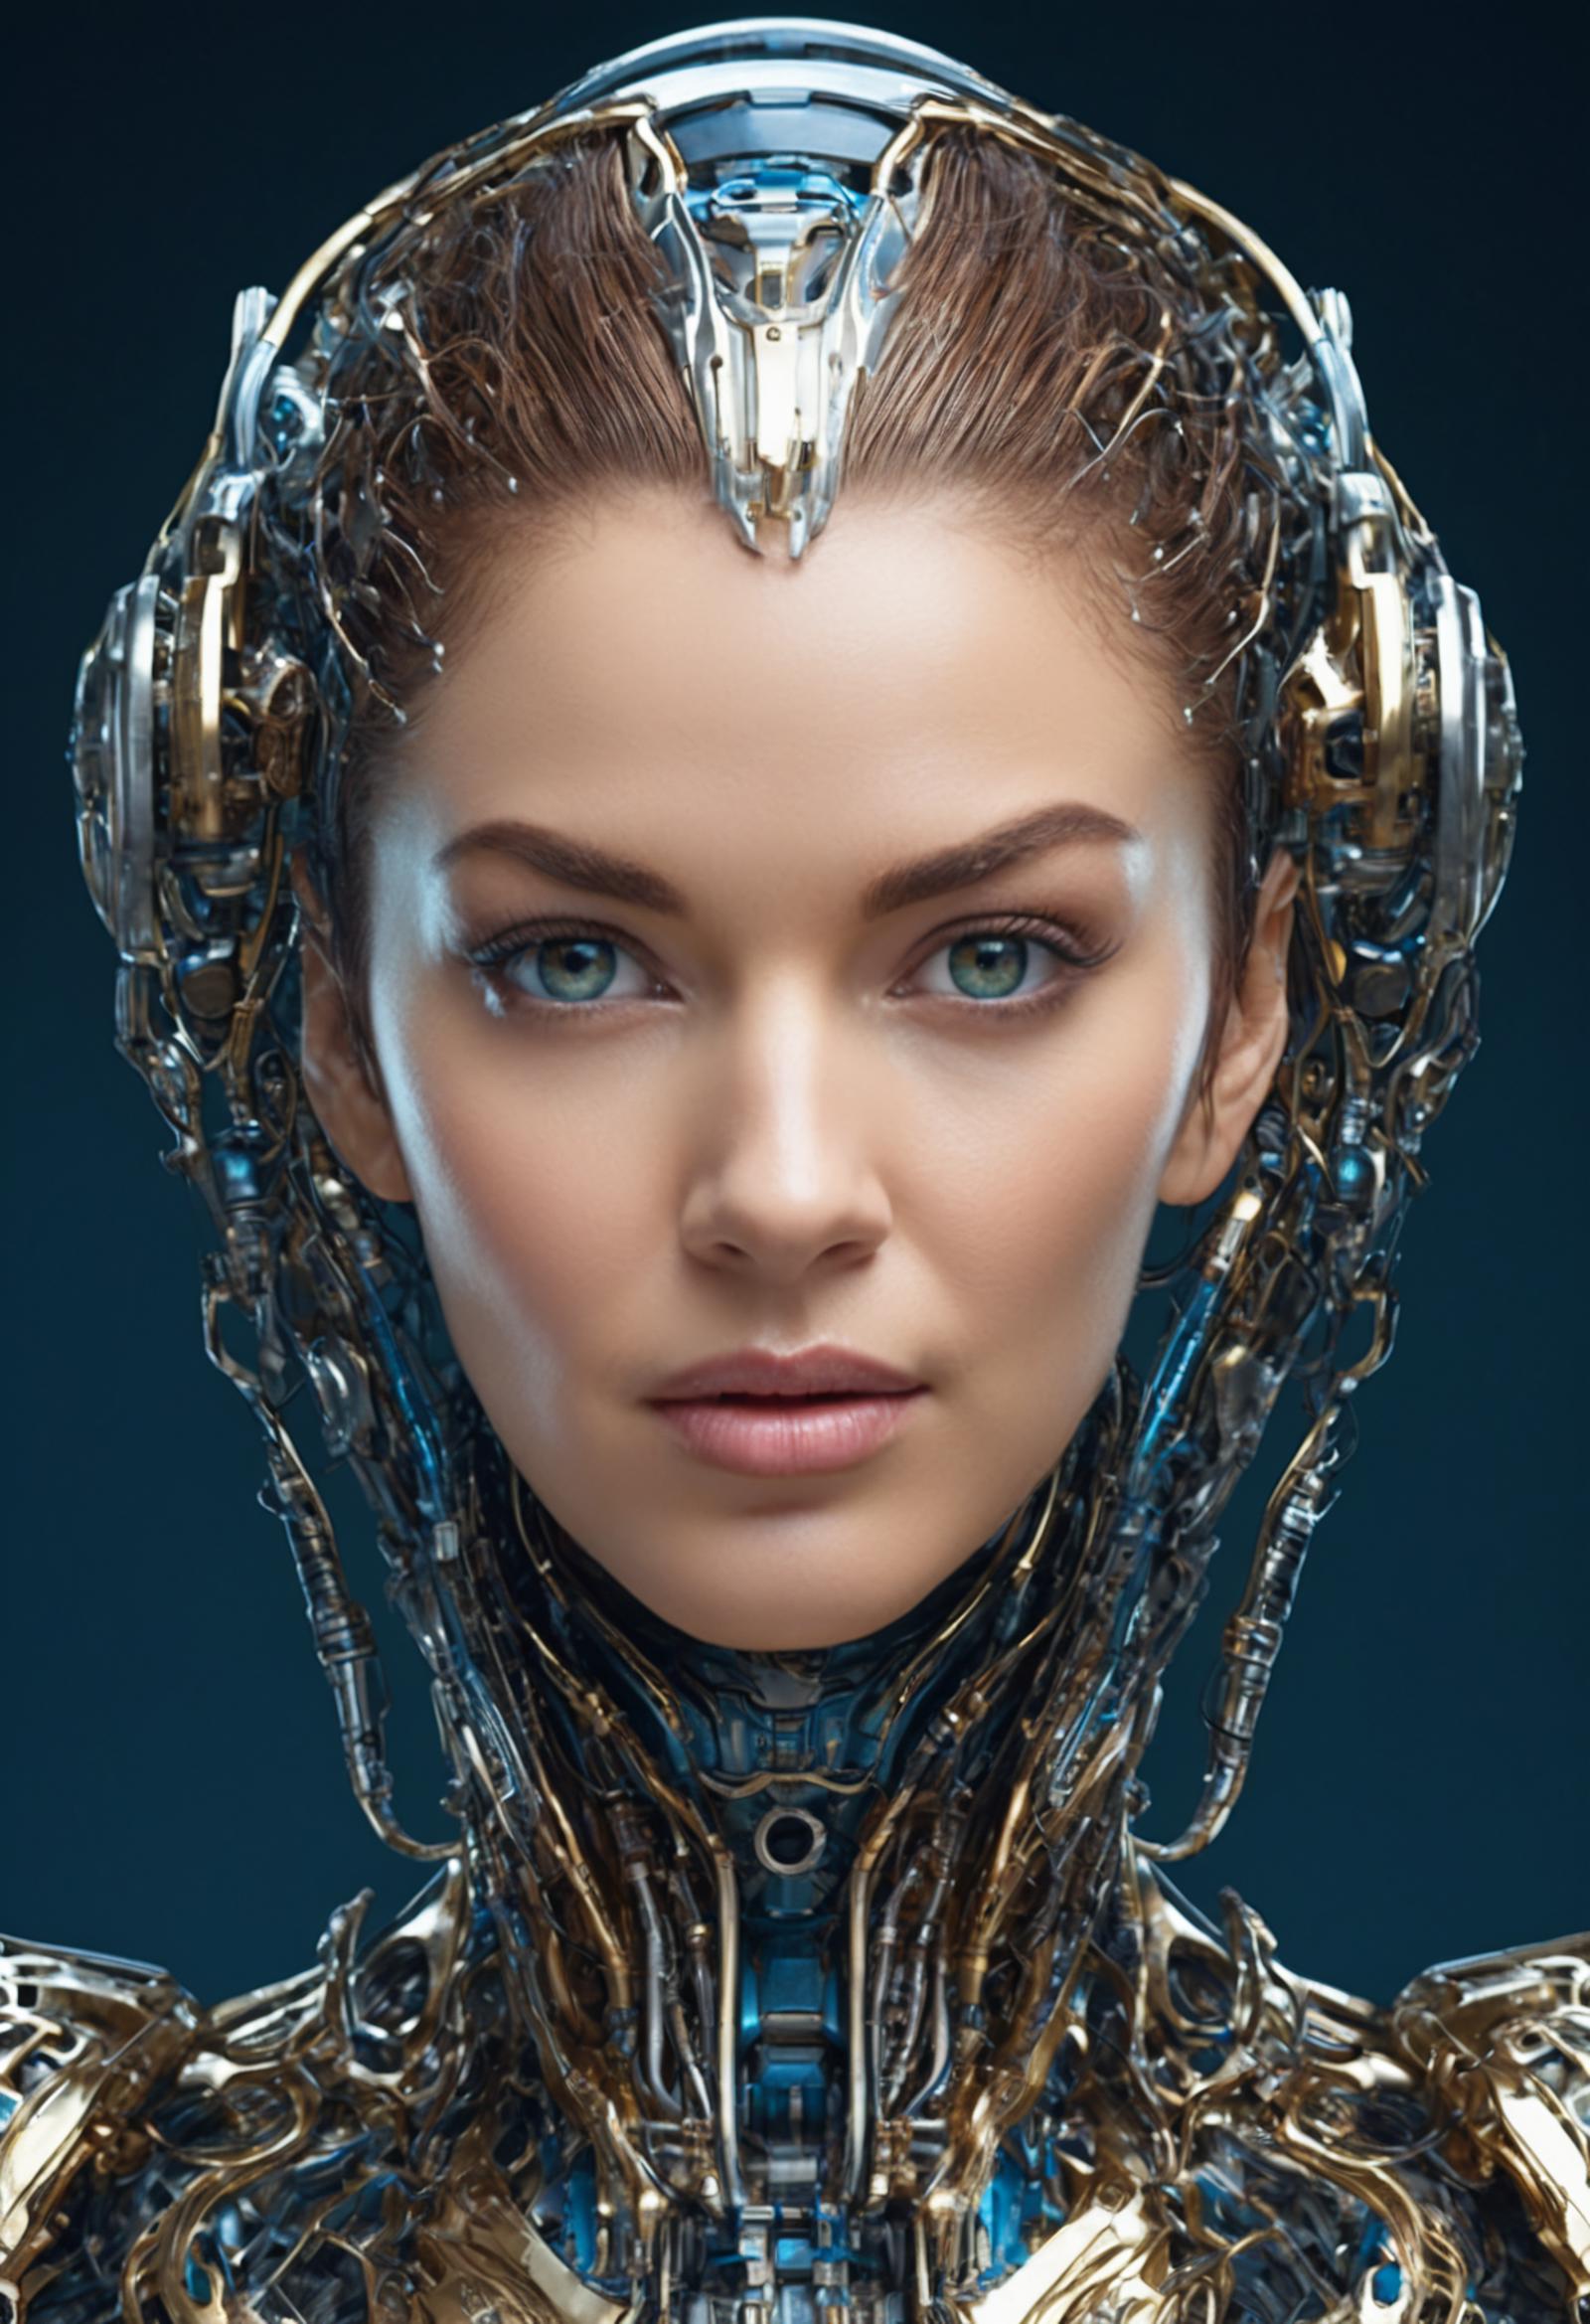 AI model image by _degenerativeai_